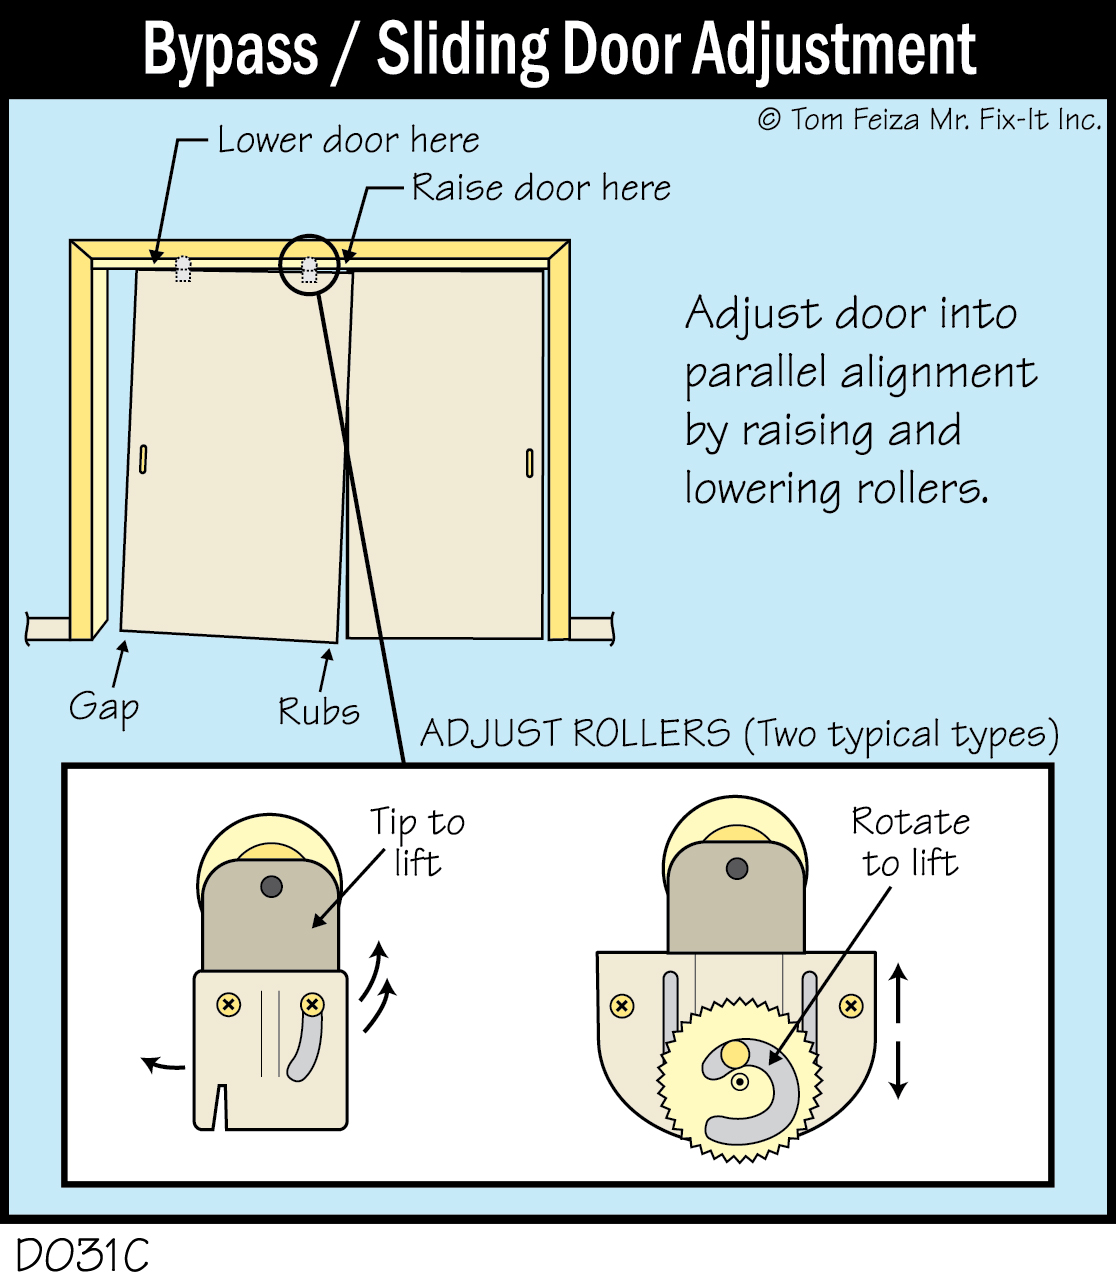 D031C - Bypass_Sliding Door Adjustment #2